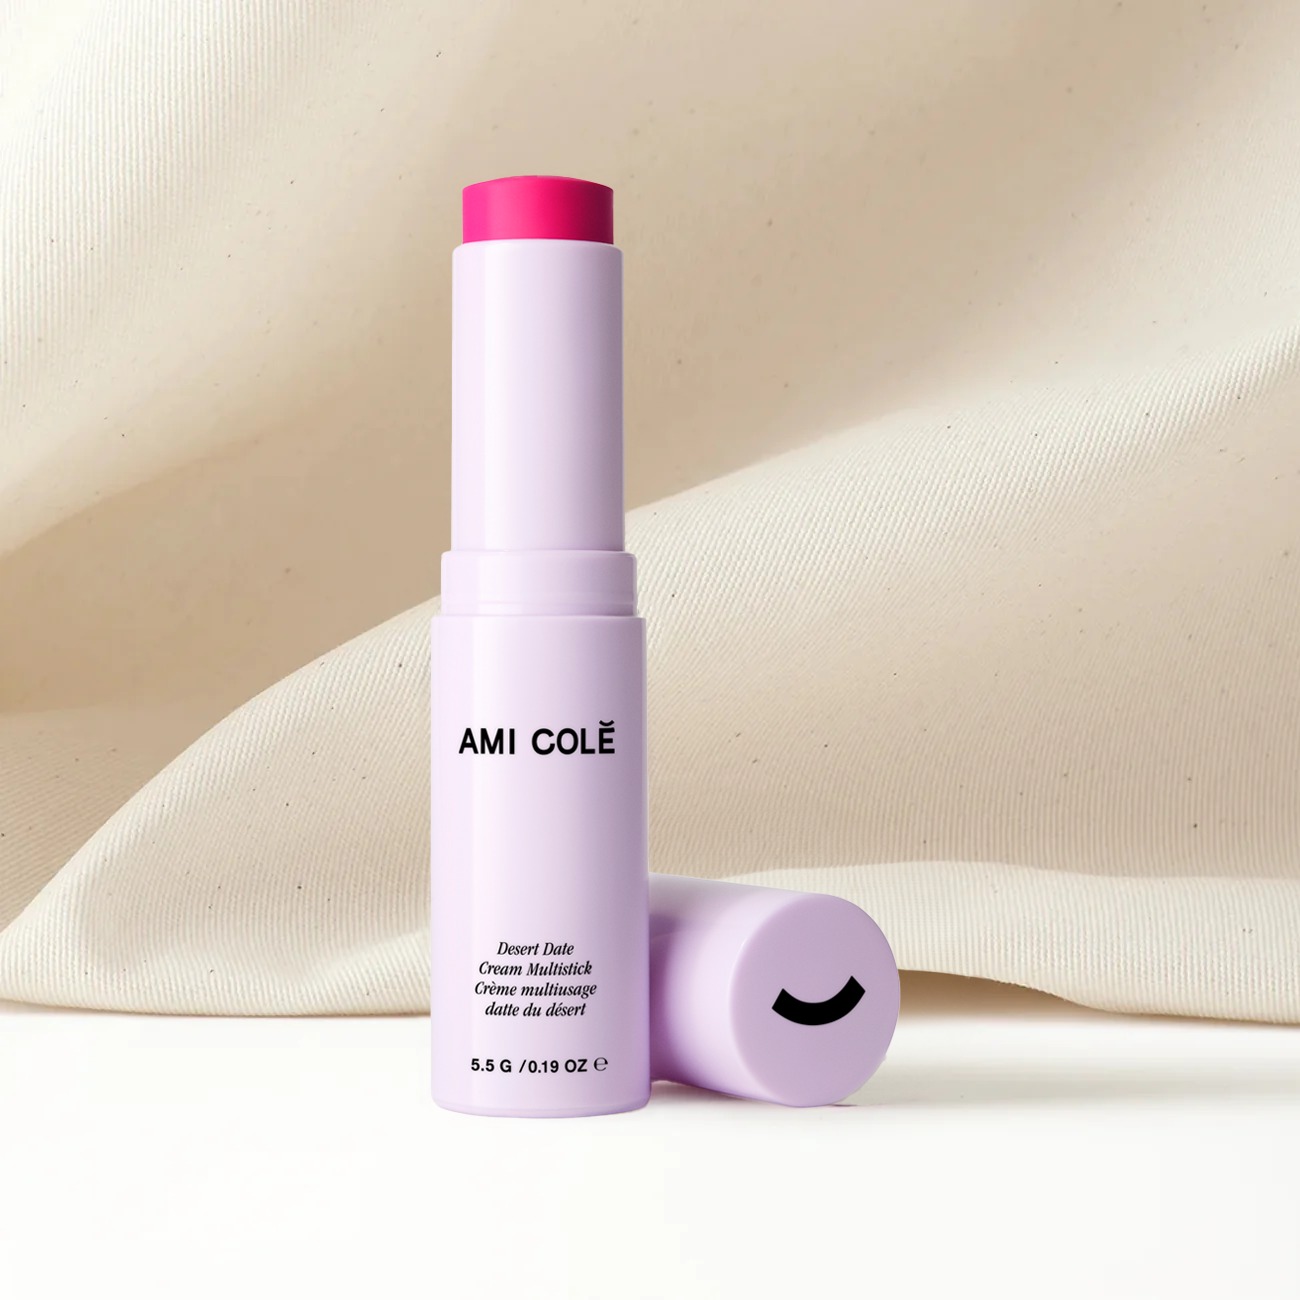 Ami Cole Desert Date Cream Multistick - Pink Sel